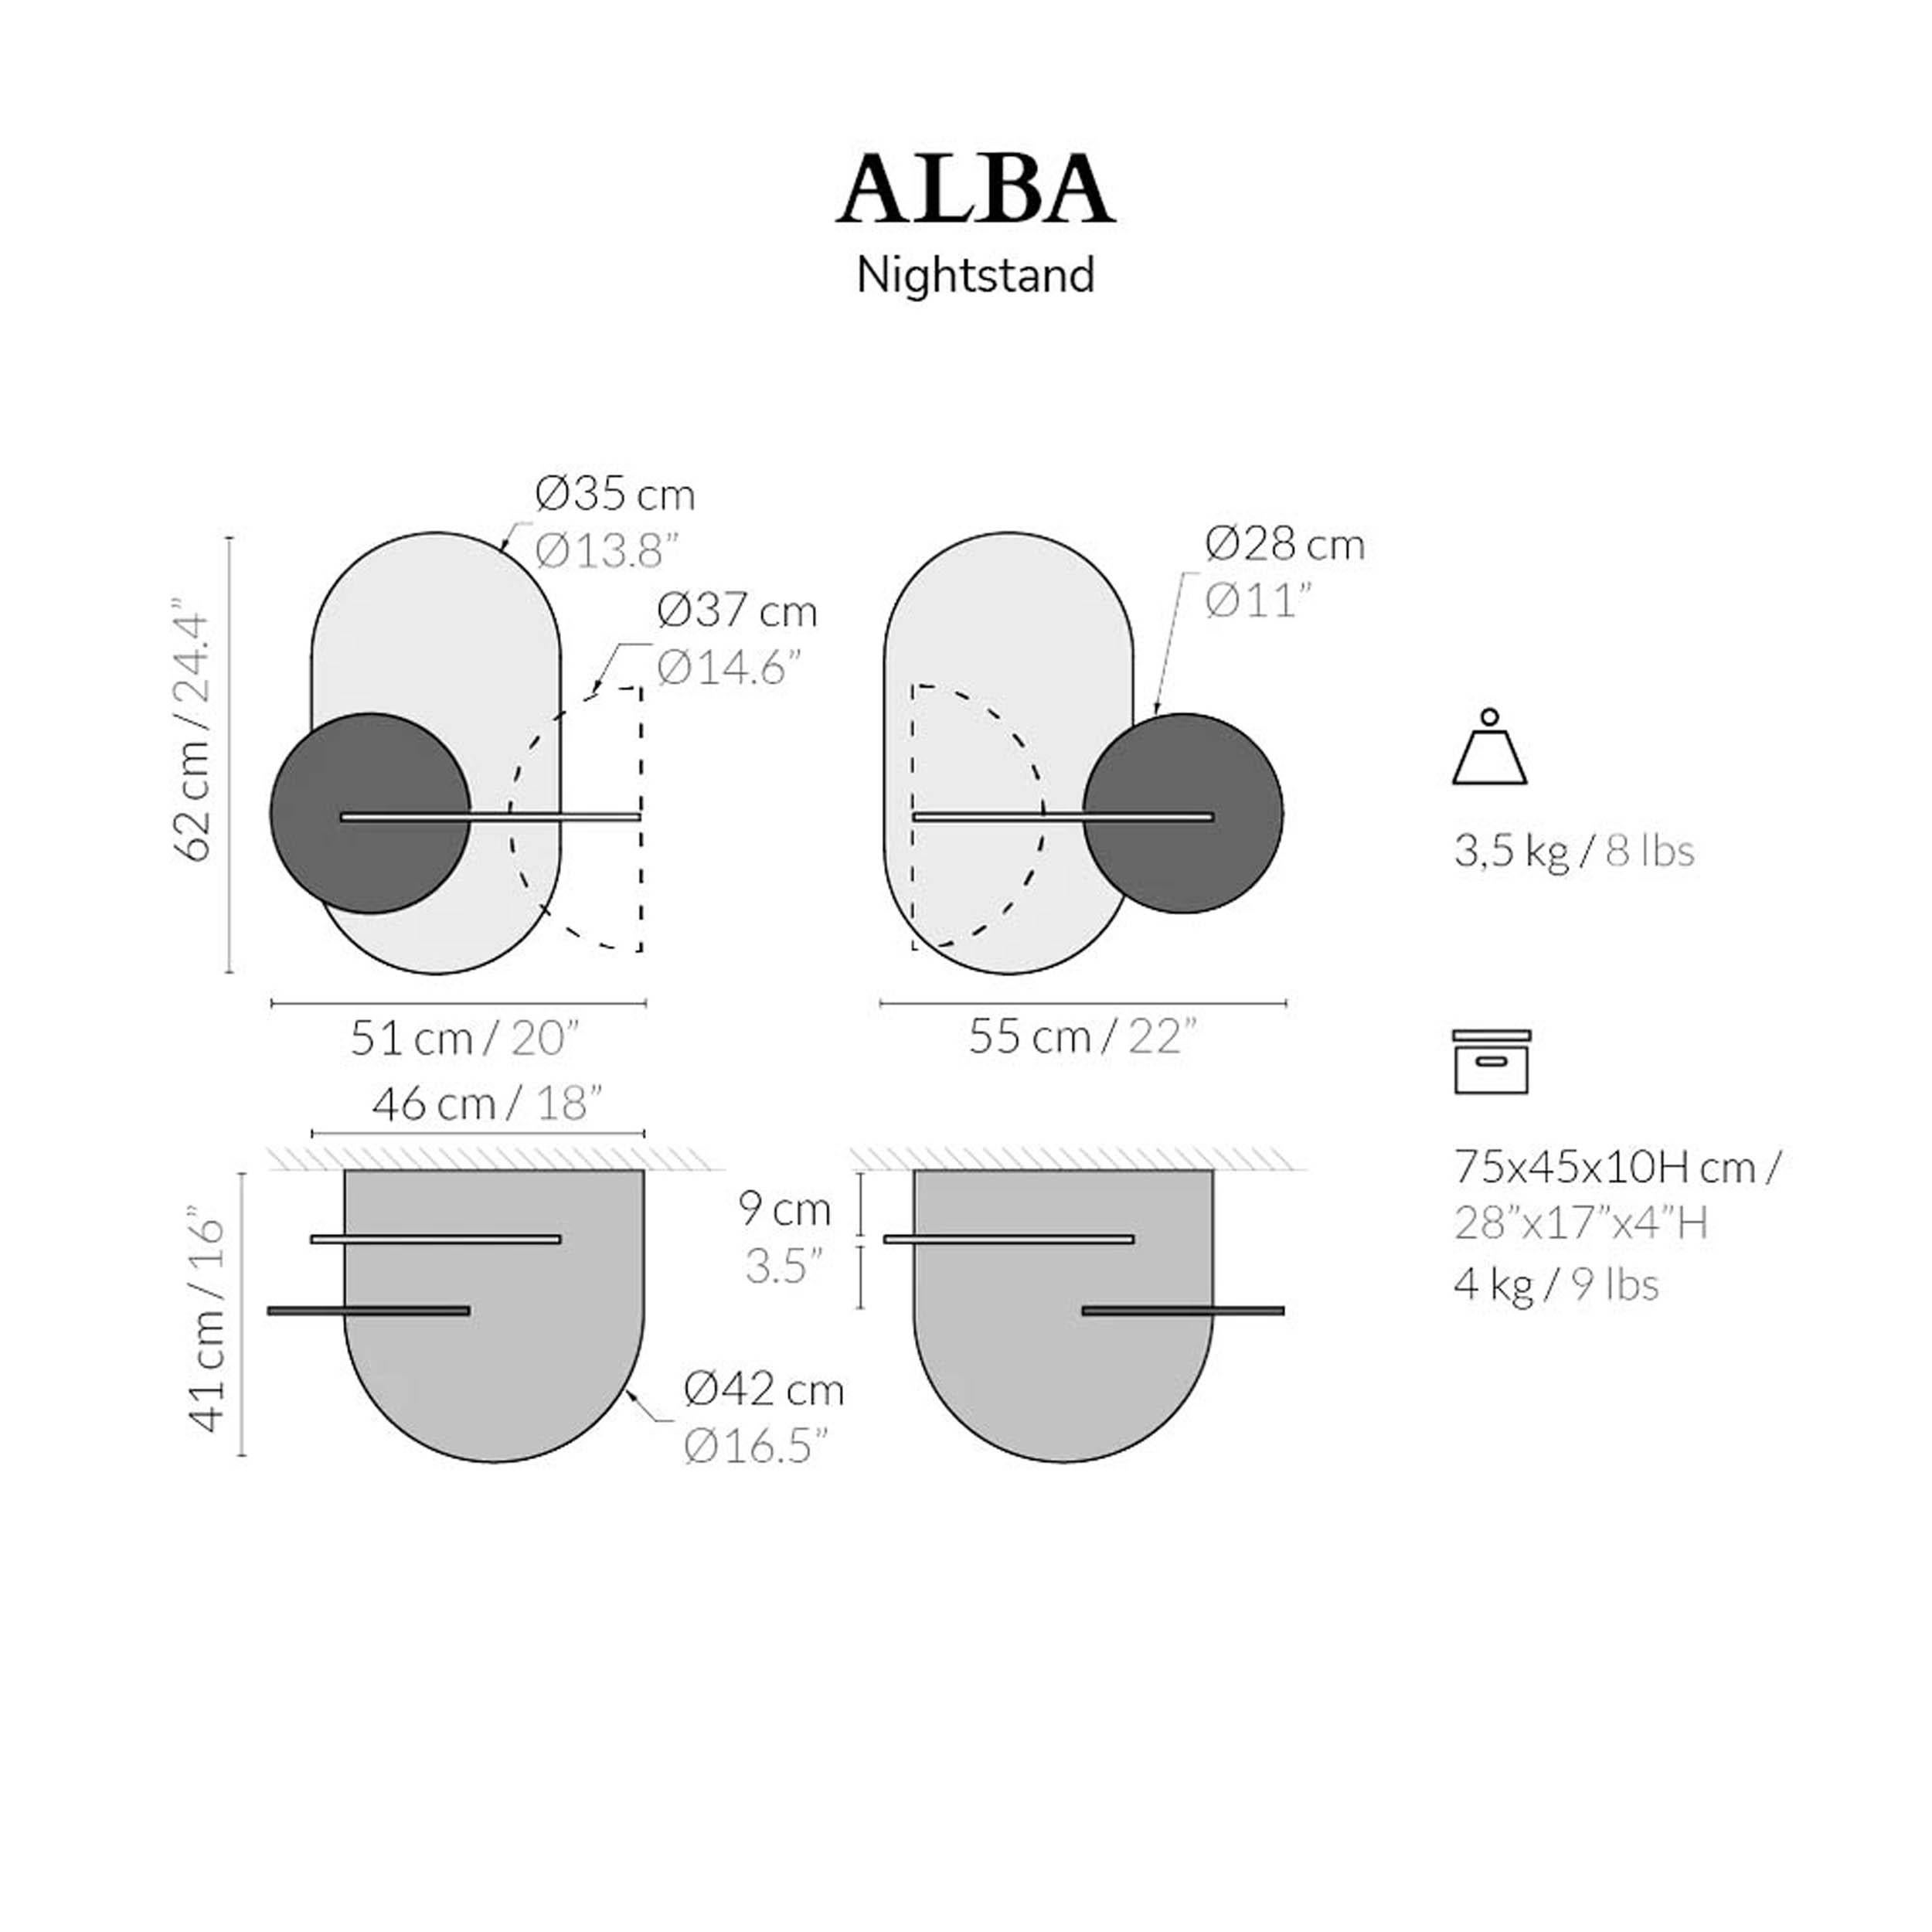 Minimaliste Table de chevet Alba L ovale en noyer noir en vente